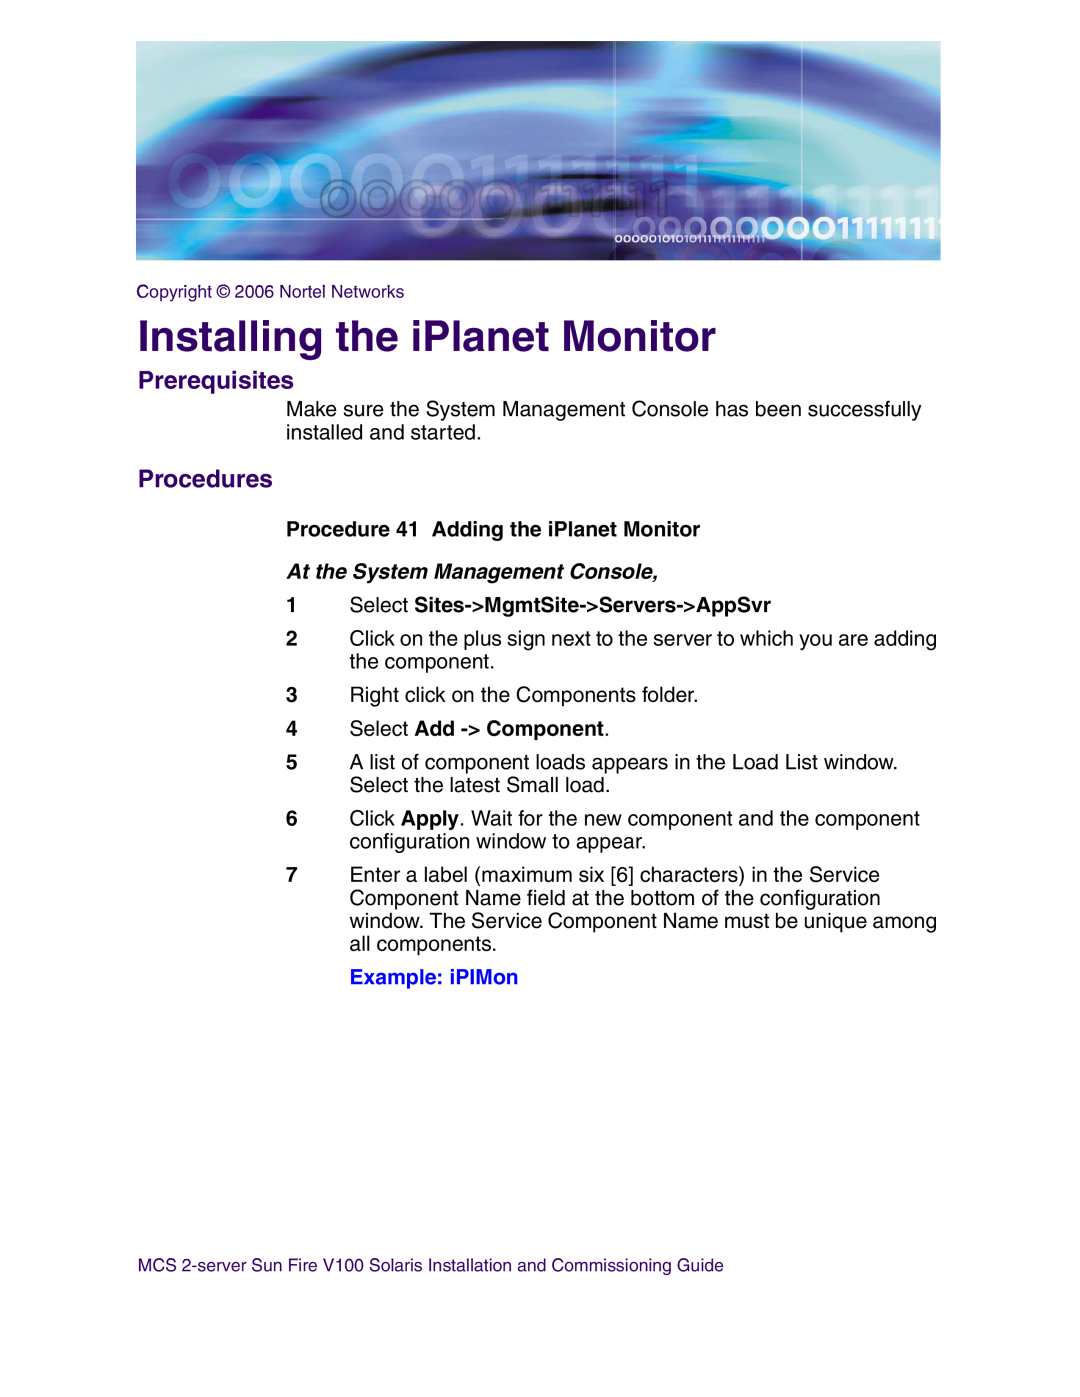 Nortel Networks V100 Installing the iPlanet Monitor, Procedure 41 Adding the iPlanet Monitor, Example iPIMon, Procedures 